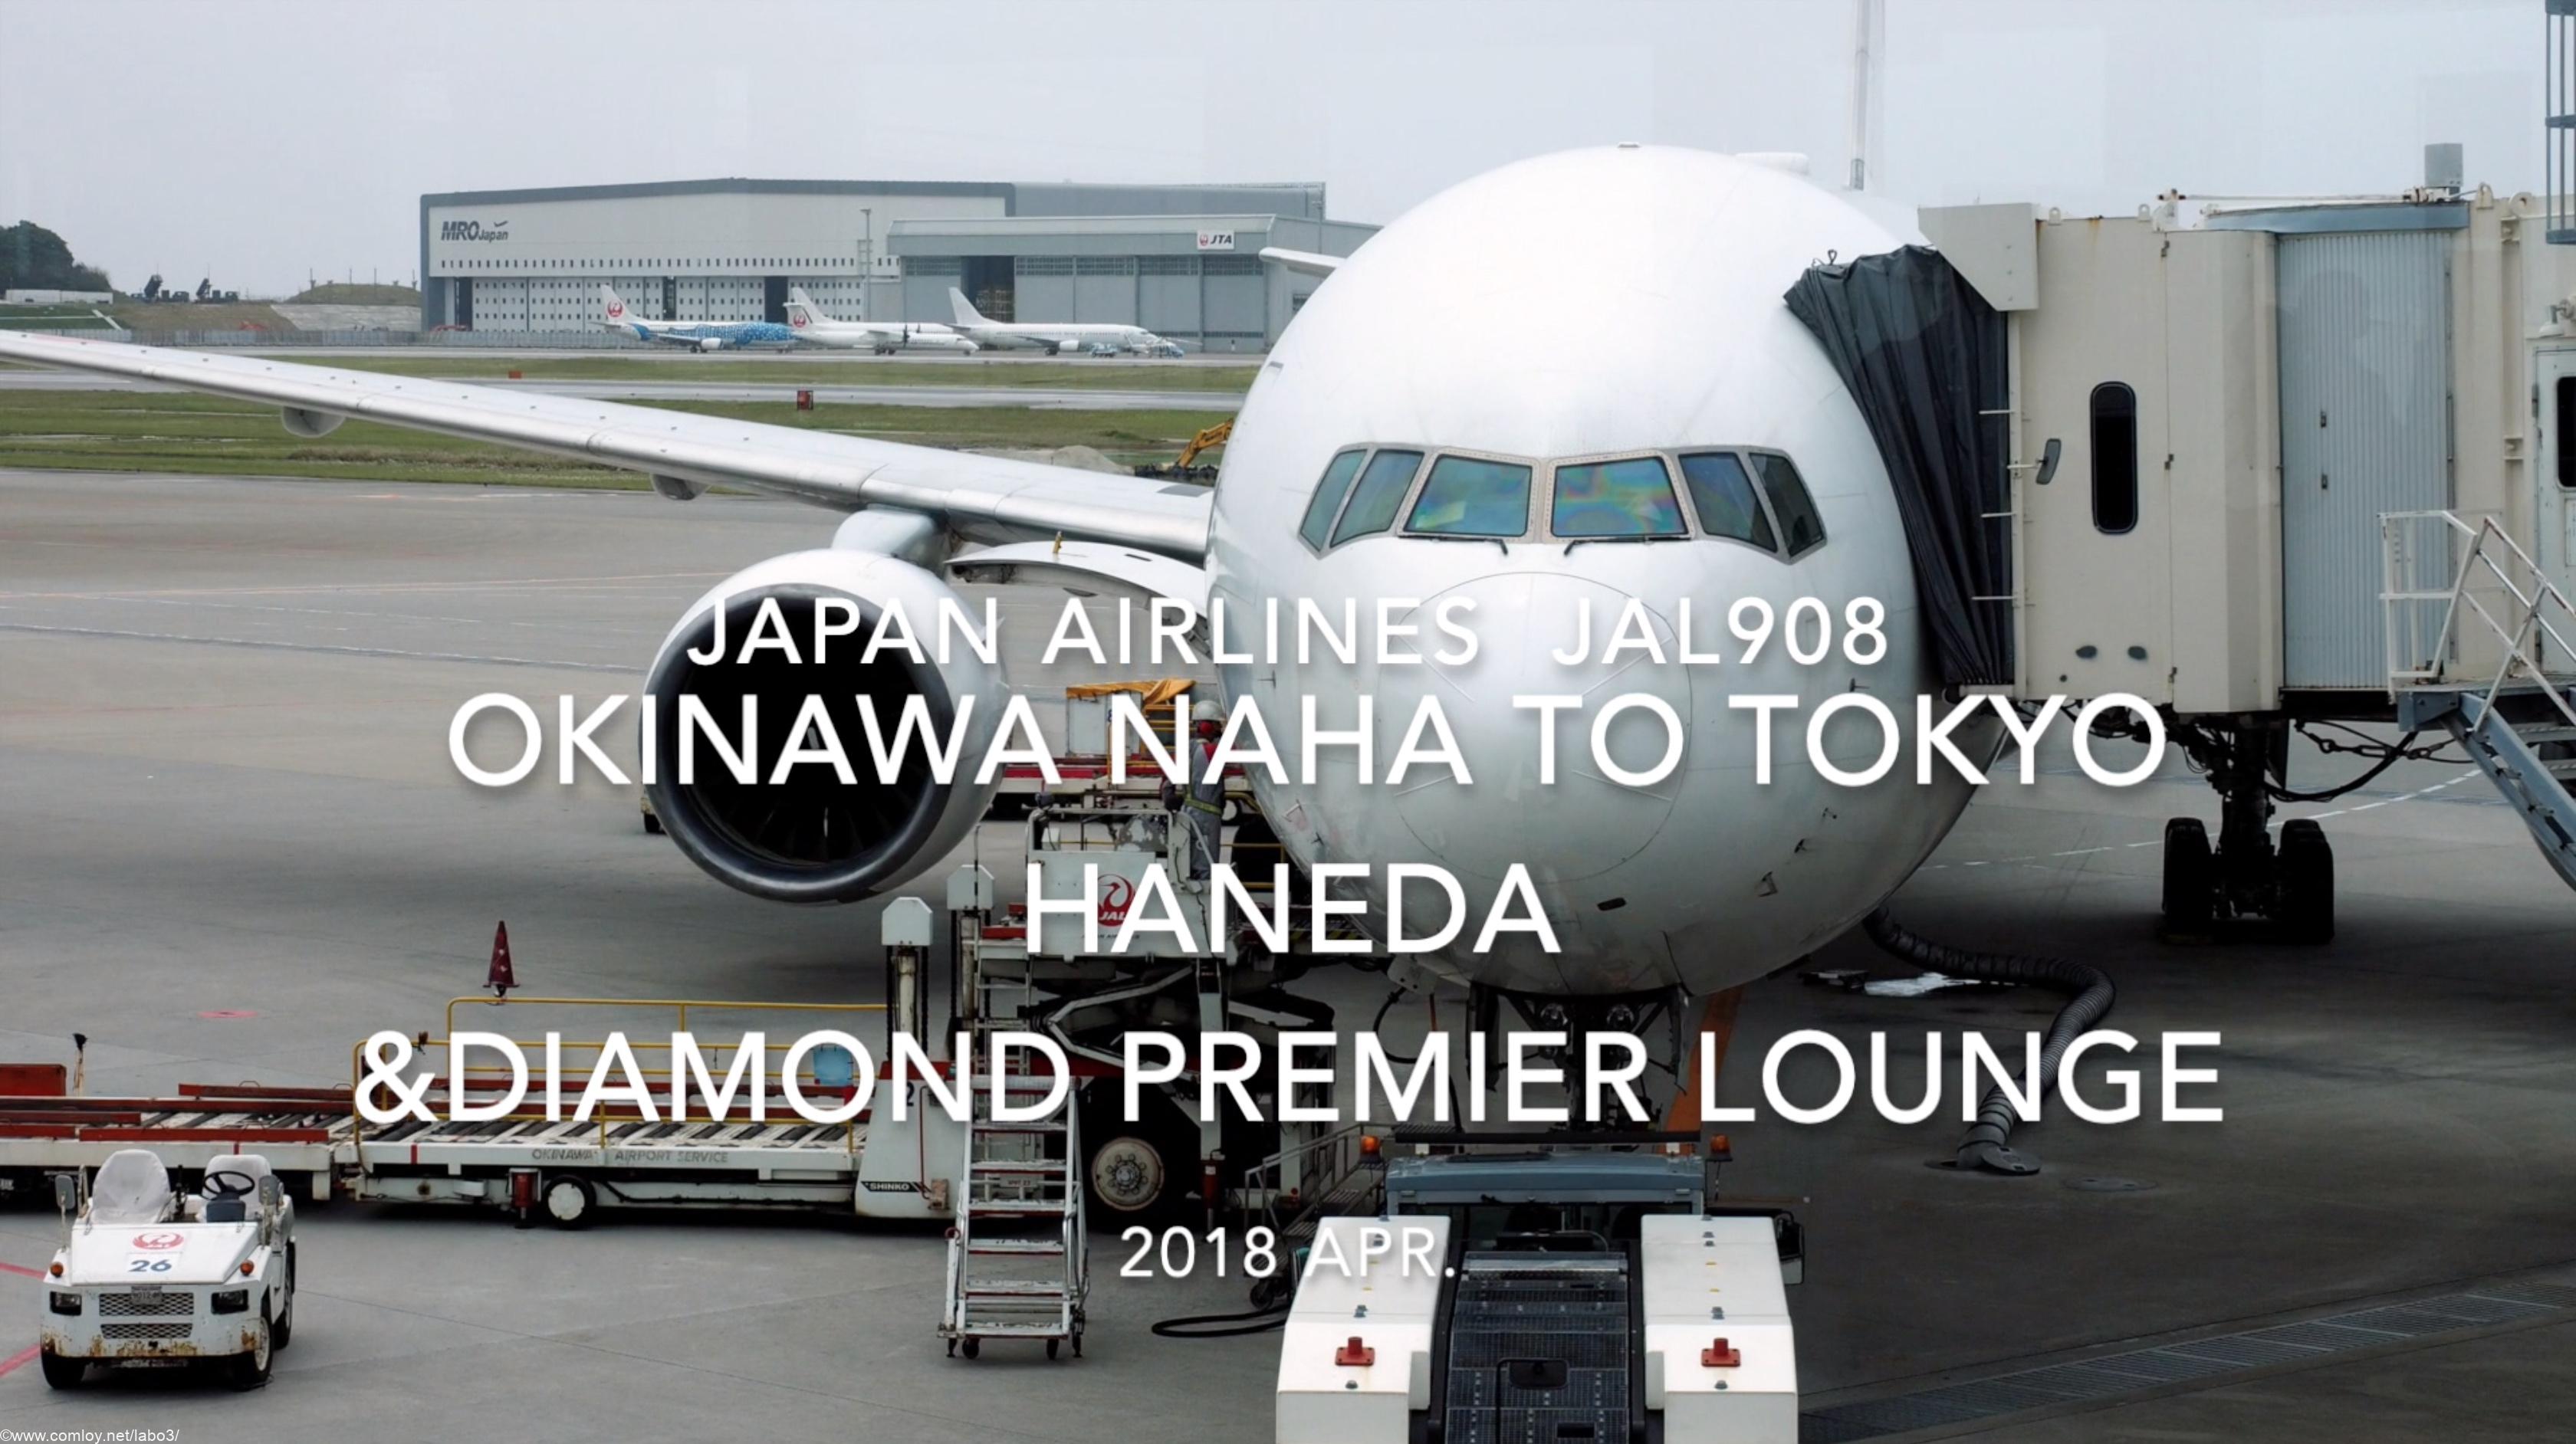 【Flight Report】Japan Airlines JAL908 OKINAWA NAHA to TOKYO HANEDA and Diamond Premier Lounge 2018 APR 日本航空 那覇 - 羽田 搭乗記